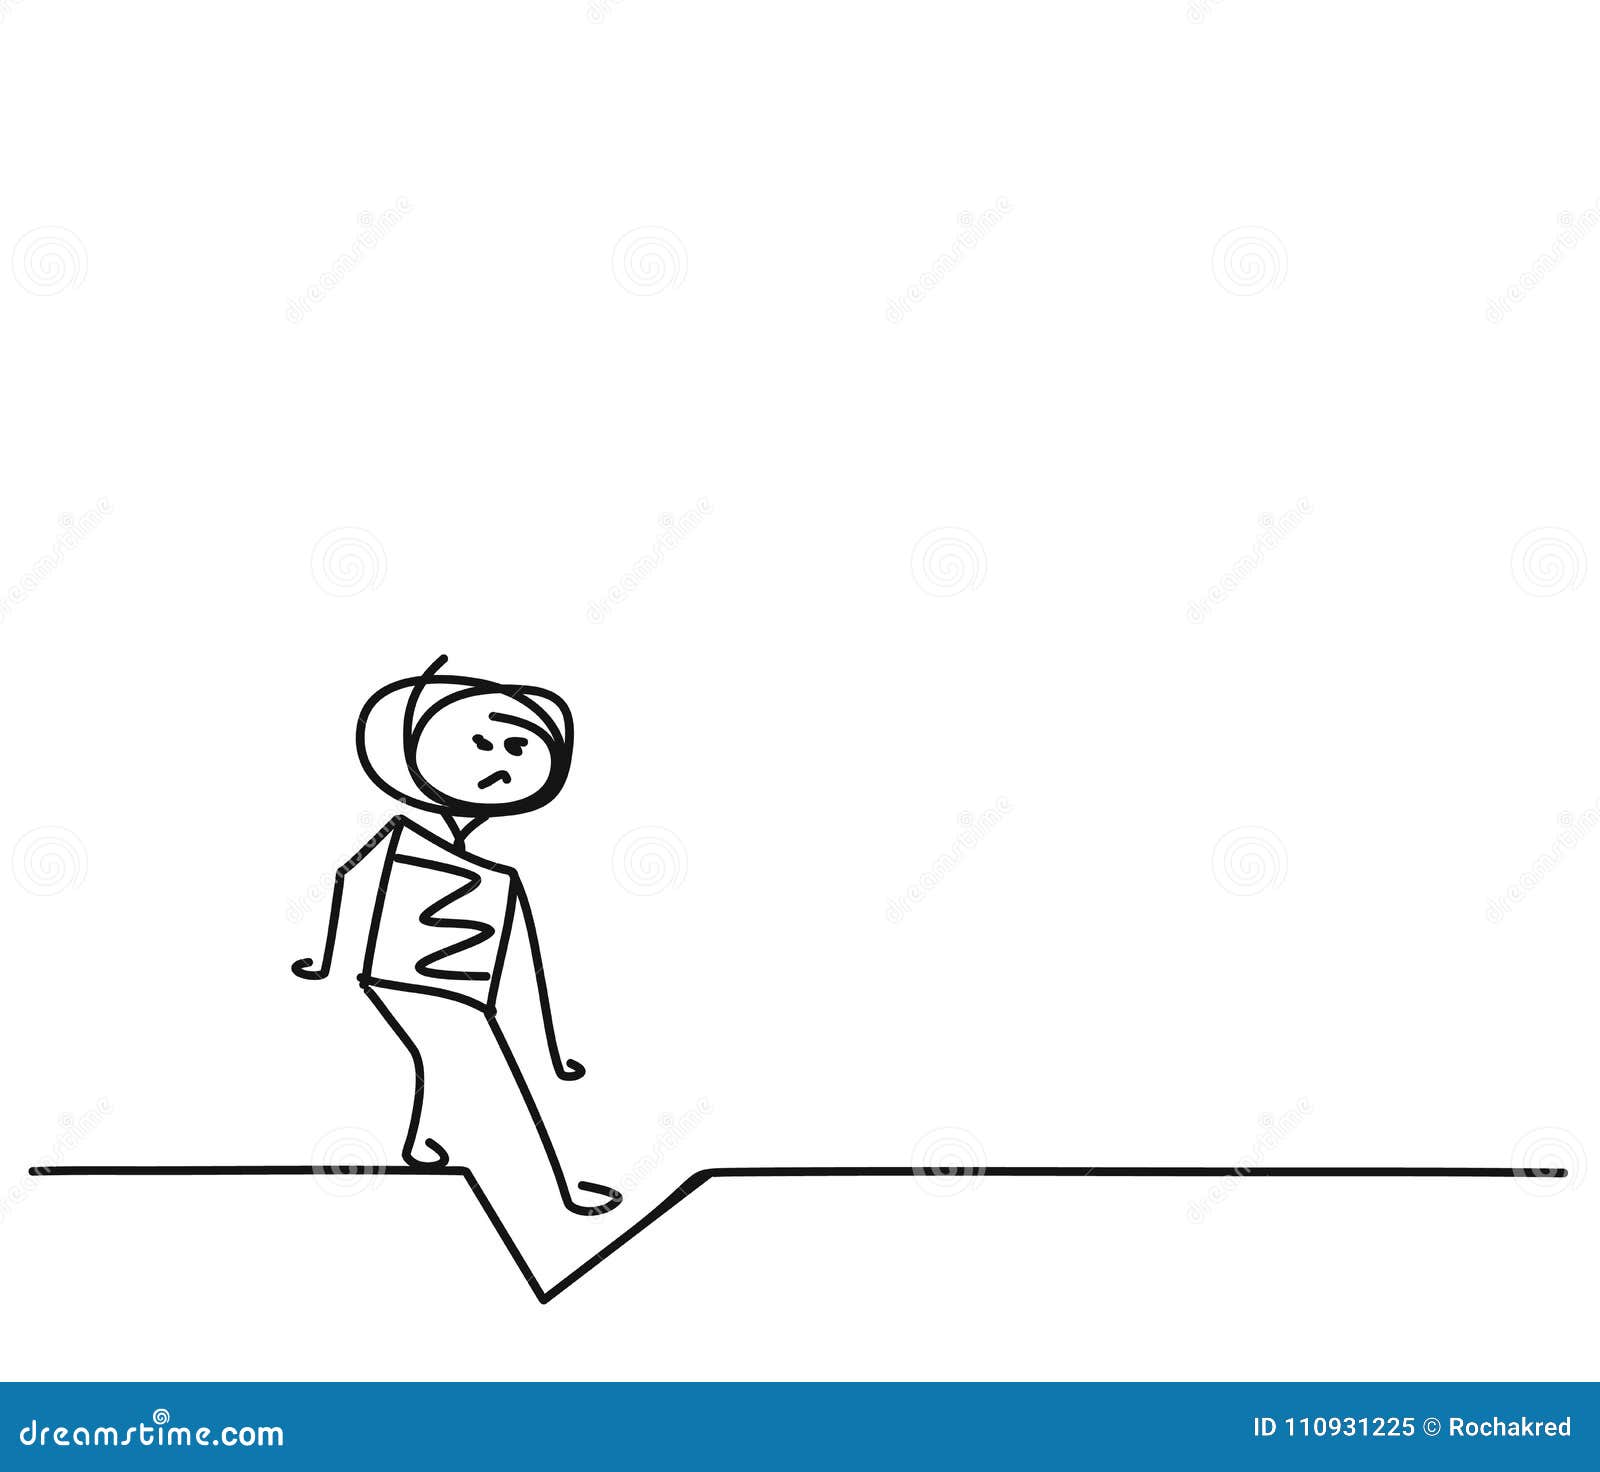 Man falling stock vector. Illustration of marathon, black - 110931225